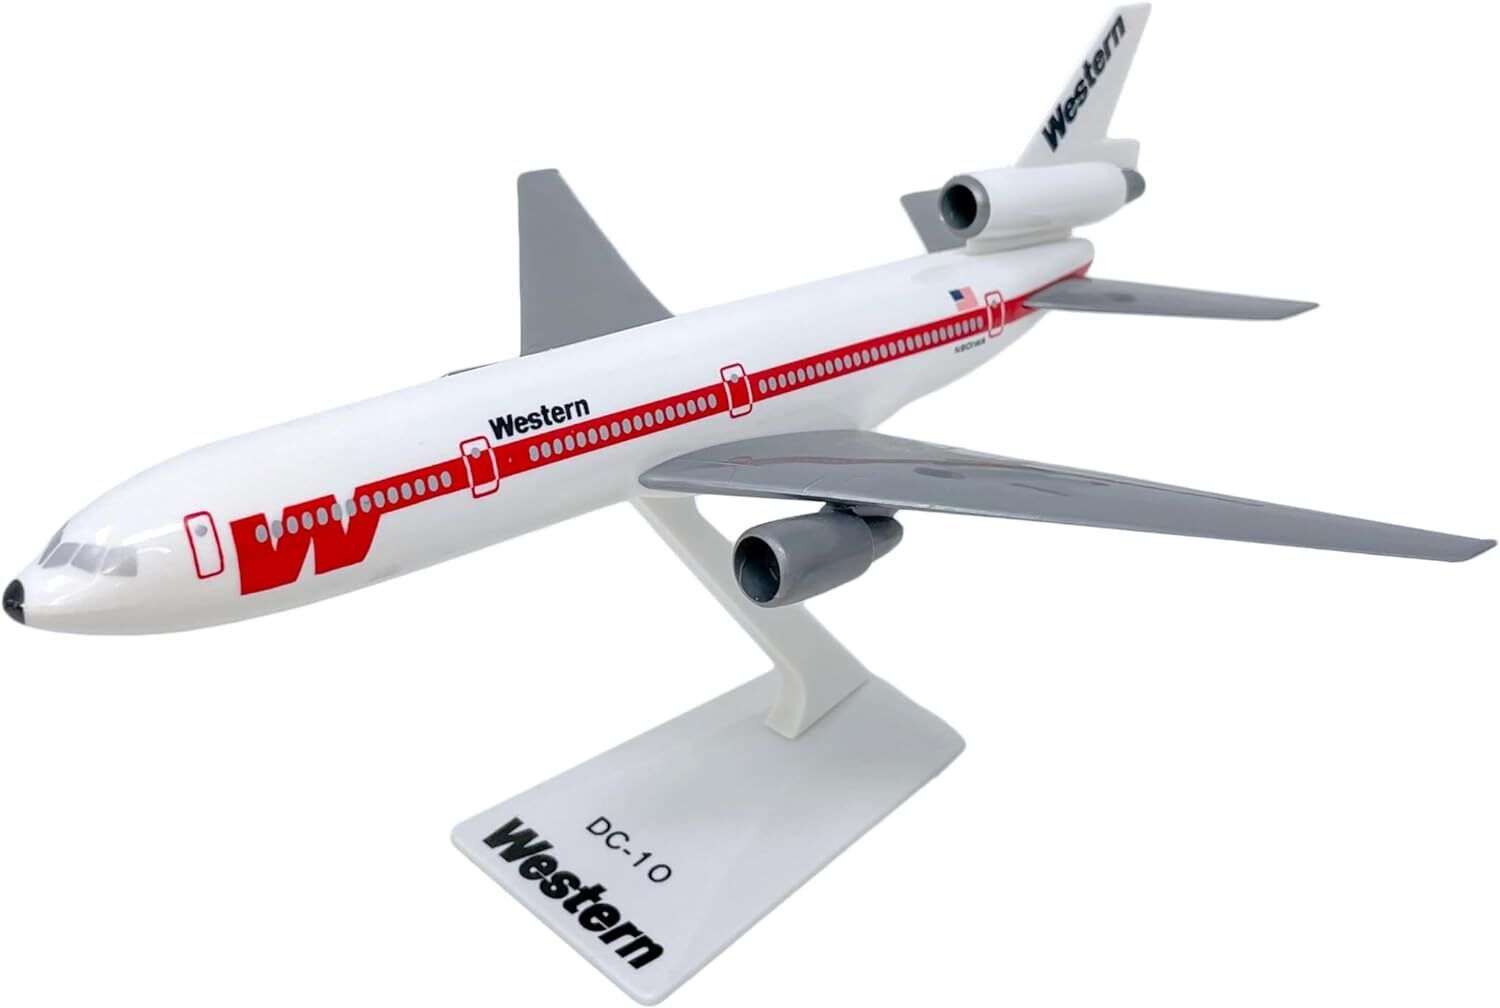 Flight Miniatures Western Airlines DC-10 Desk Display Jet Model 1/250 Airplane